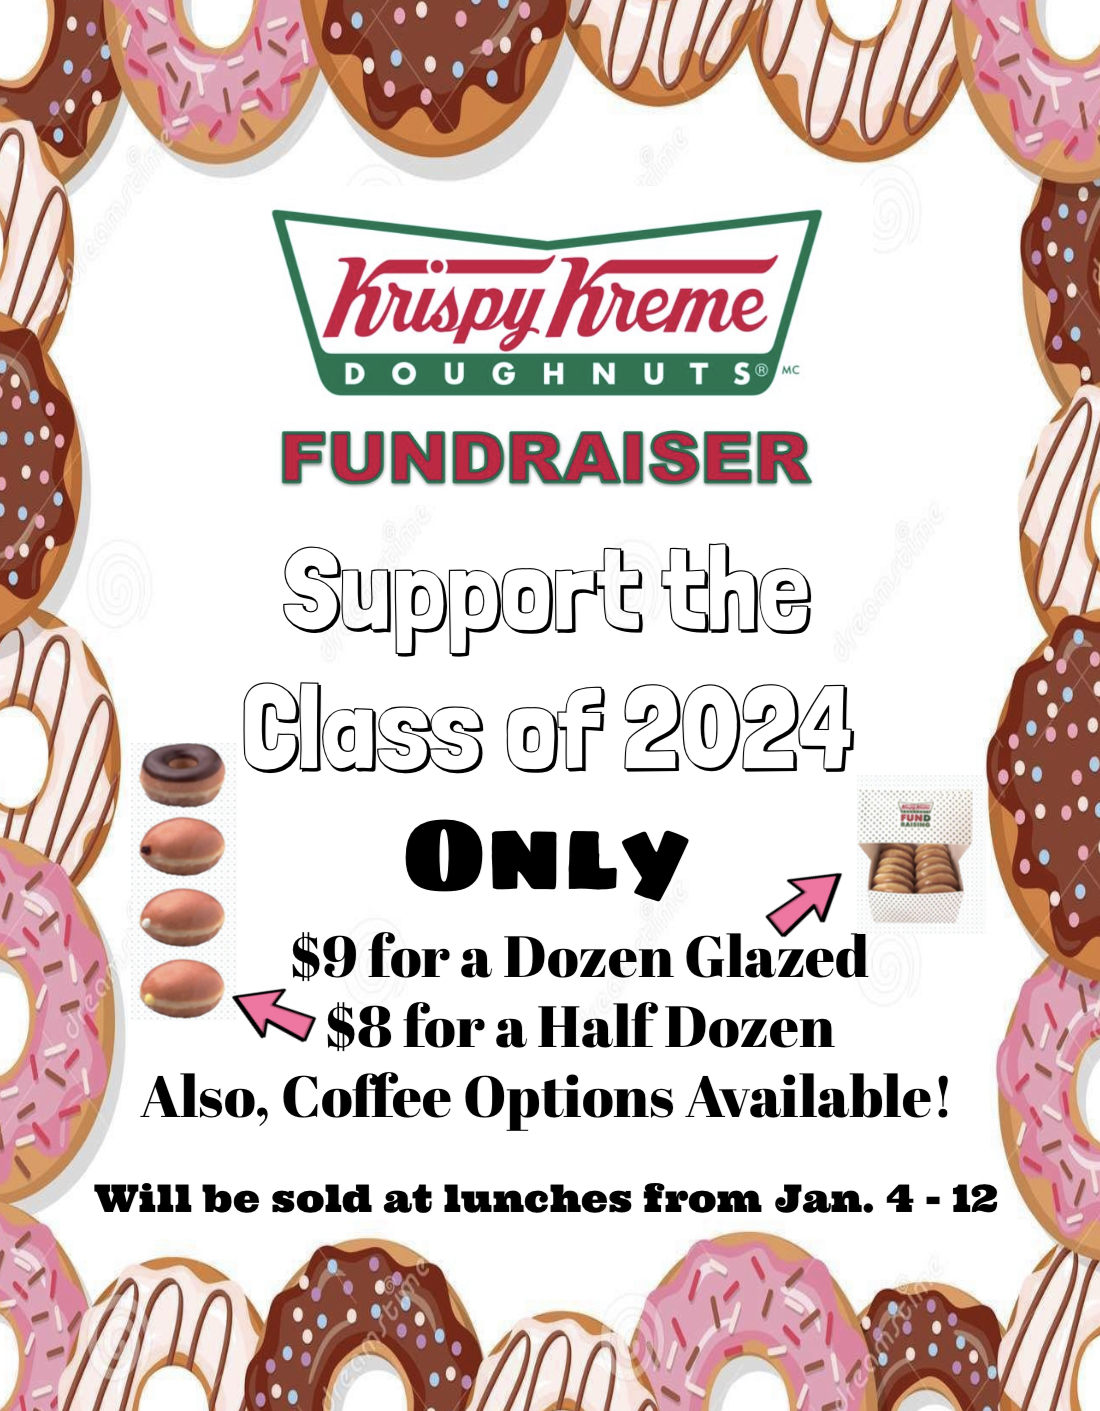 Class of 2024 is hosting a Krispy Kreme fundraiser! Mountaineer